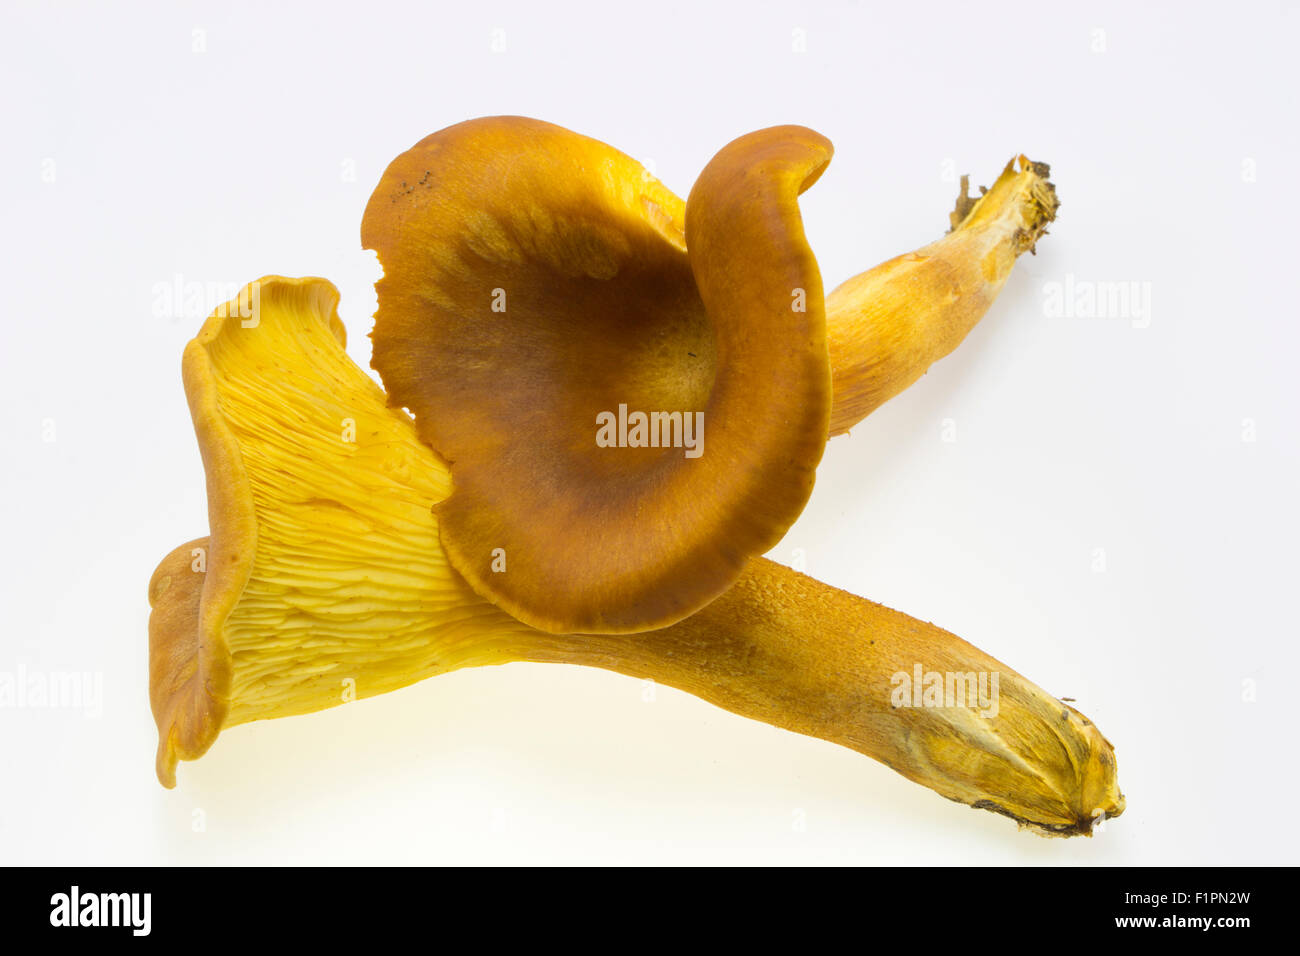 Two inedible fungi Olearius omphalotus, isolated on white background Stock Photo